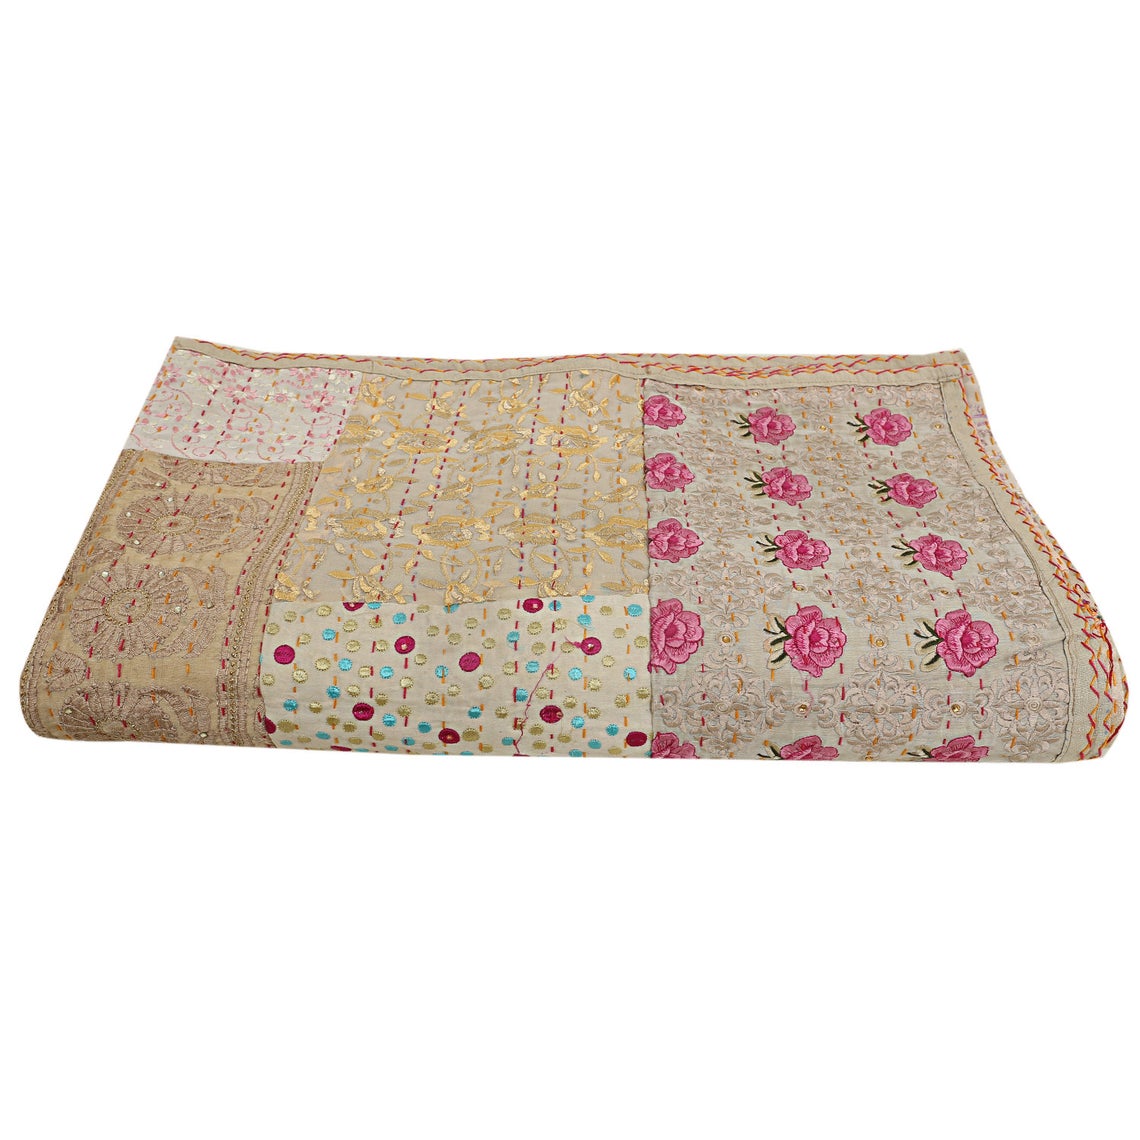 Vintage Kantha Blanket Bedspread Indian Handmade Quilt Throw Cotton Ralli Gudari 